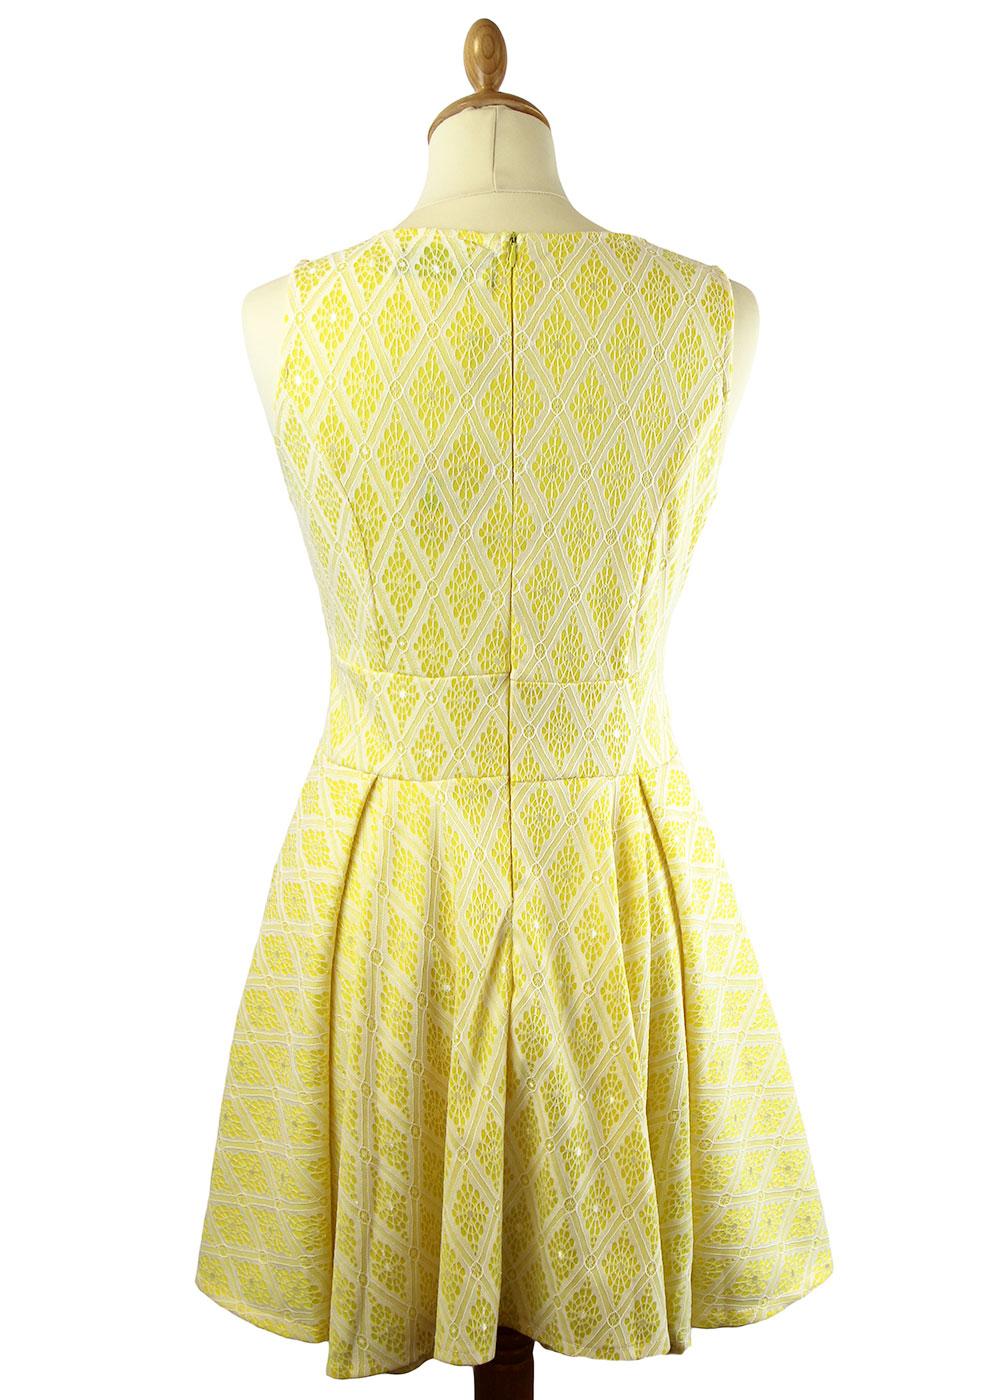 LOVESTRUCK Kimberly Retro 60s Mod Lace Overlay Dress in Yellow